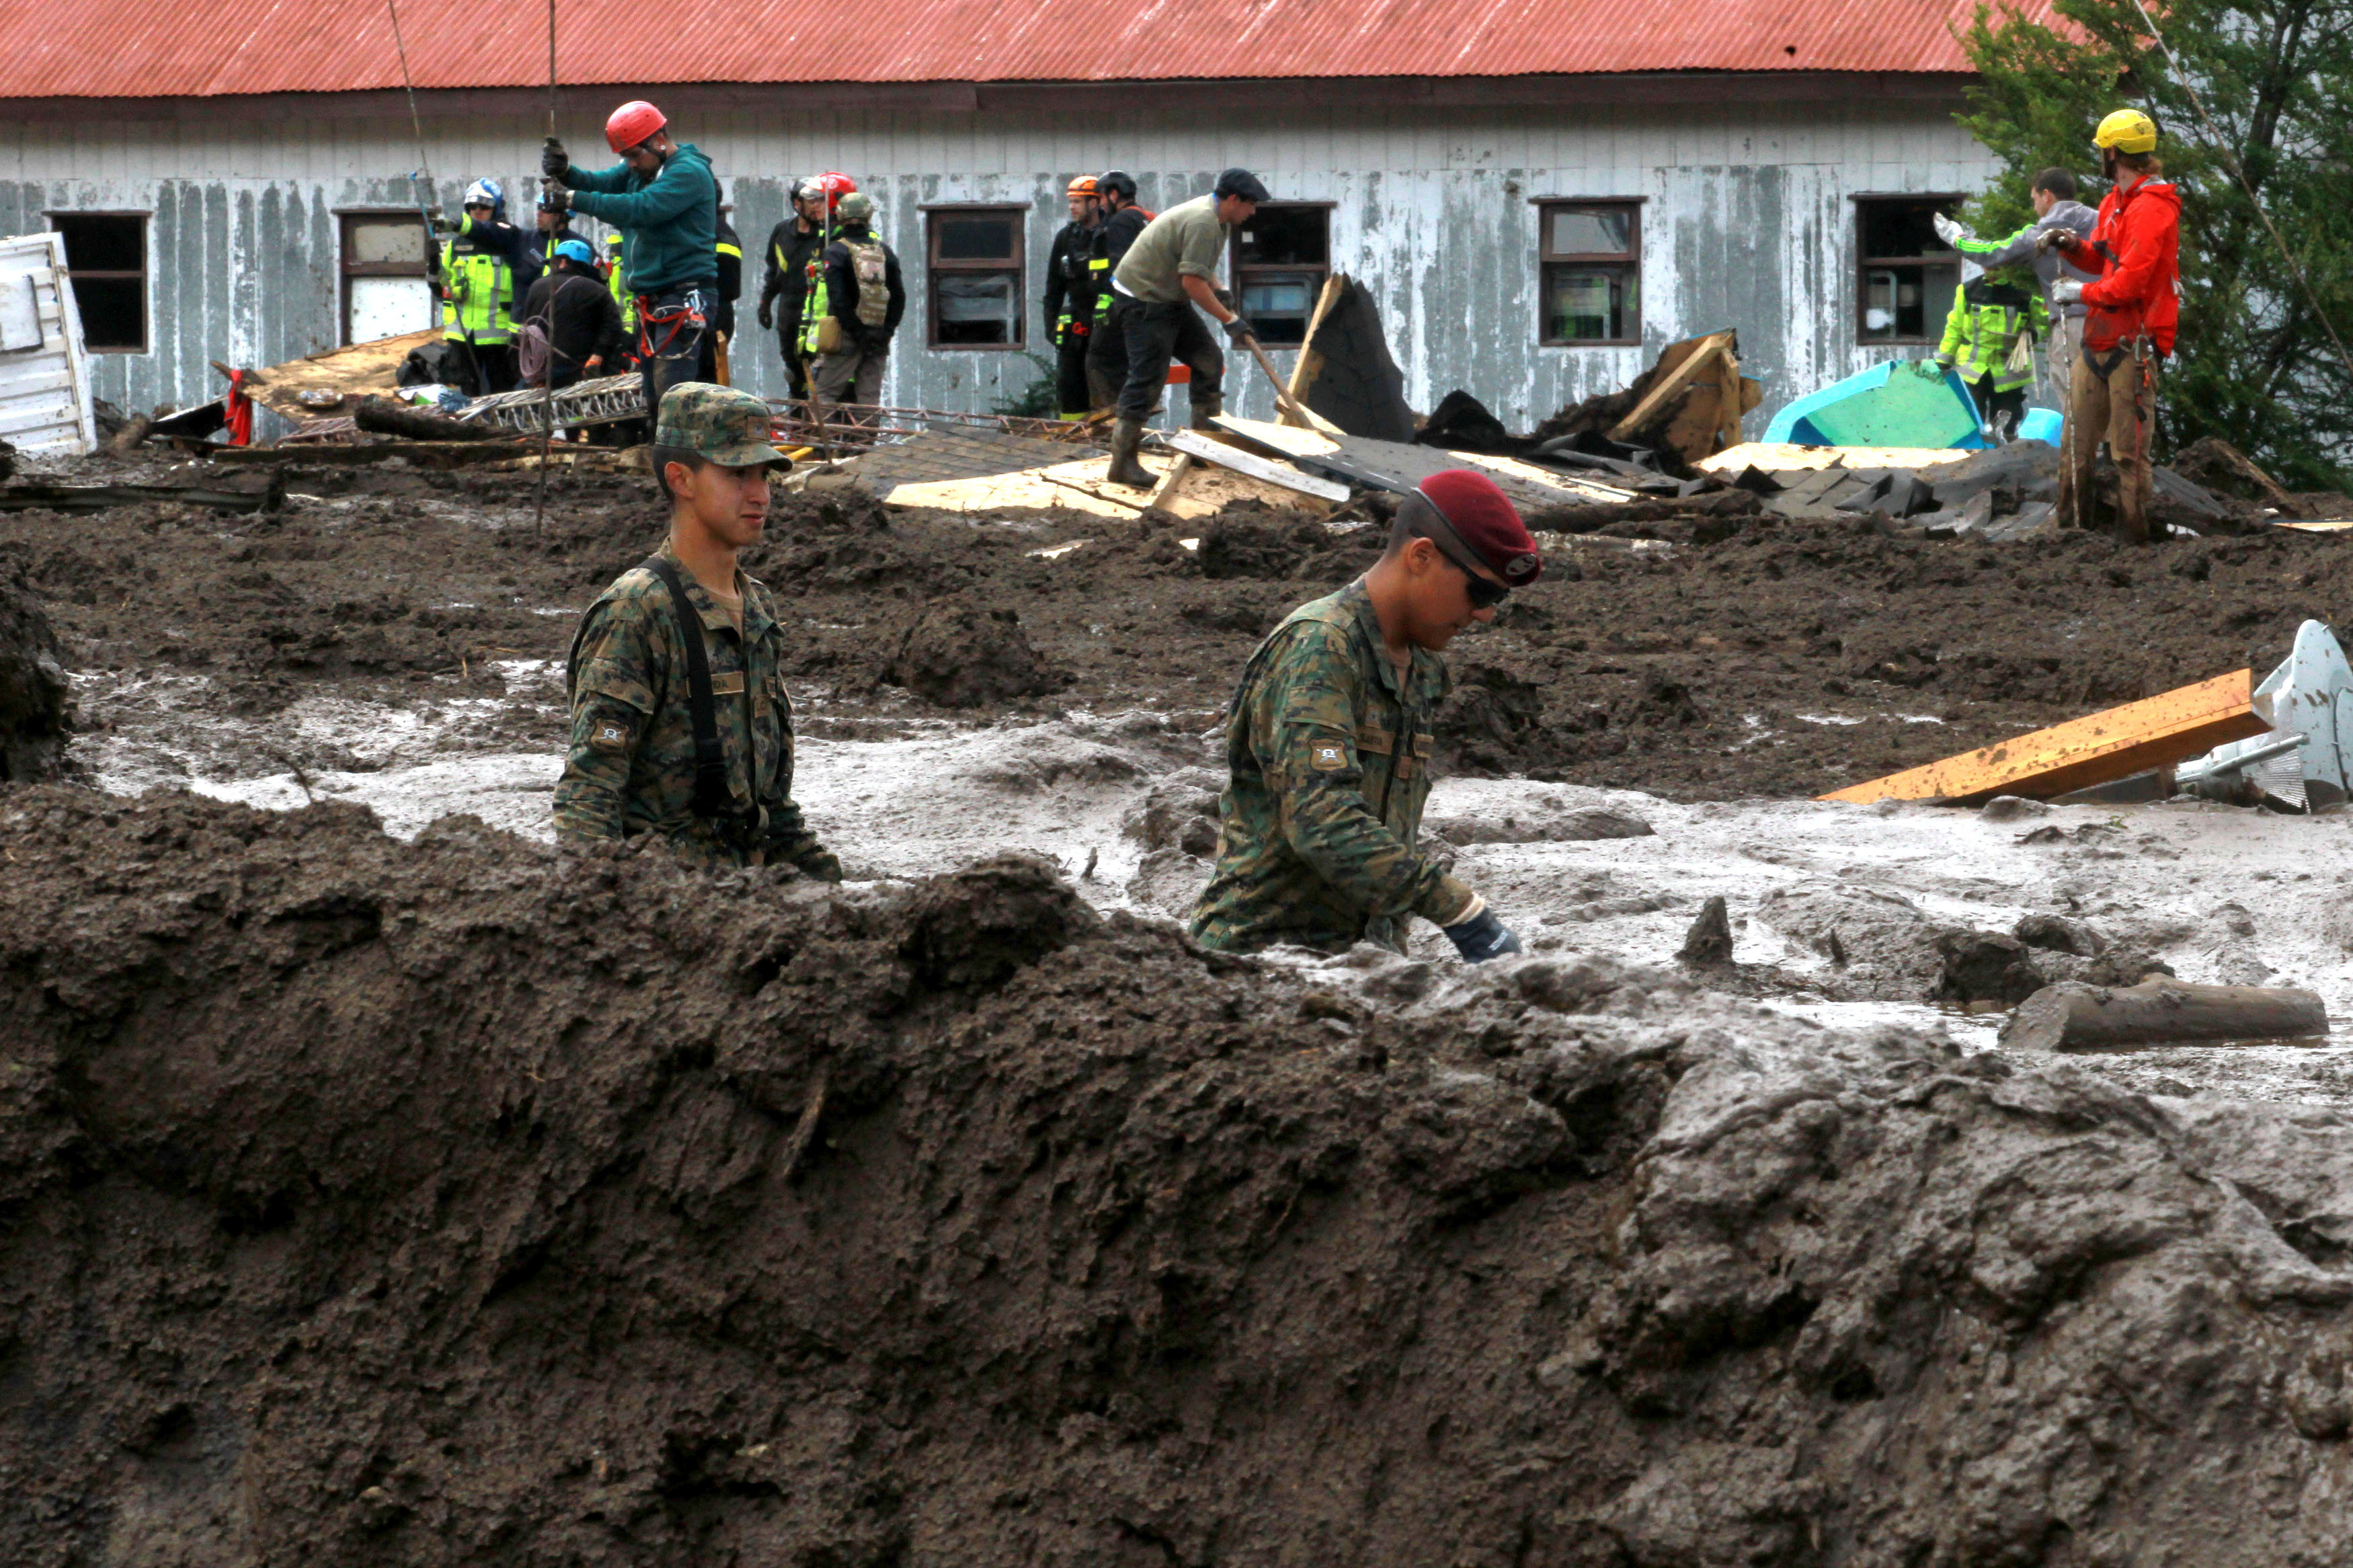 11 killed, 15 missing in Chile mudslide